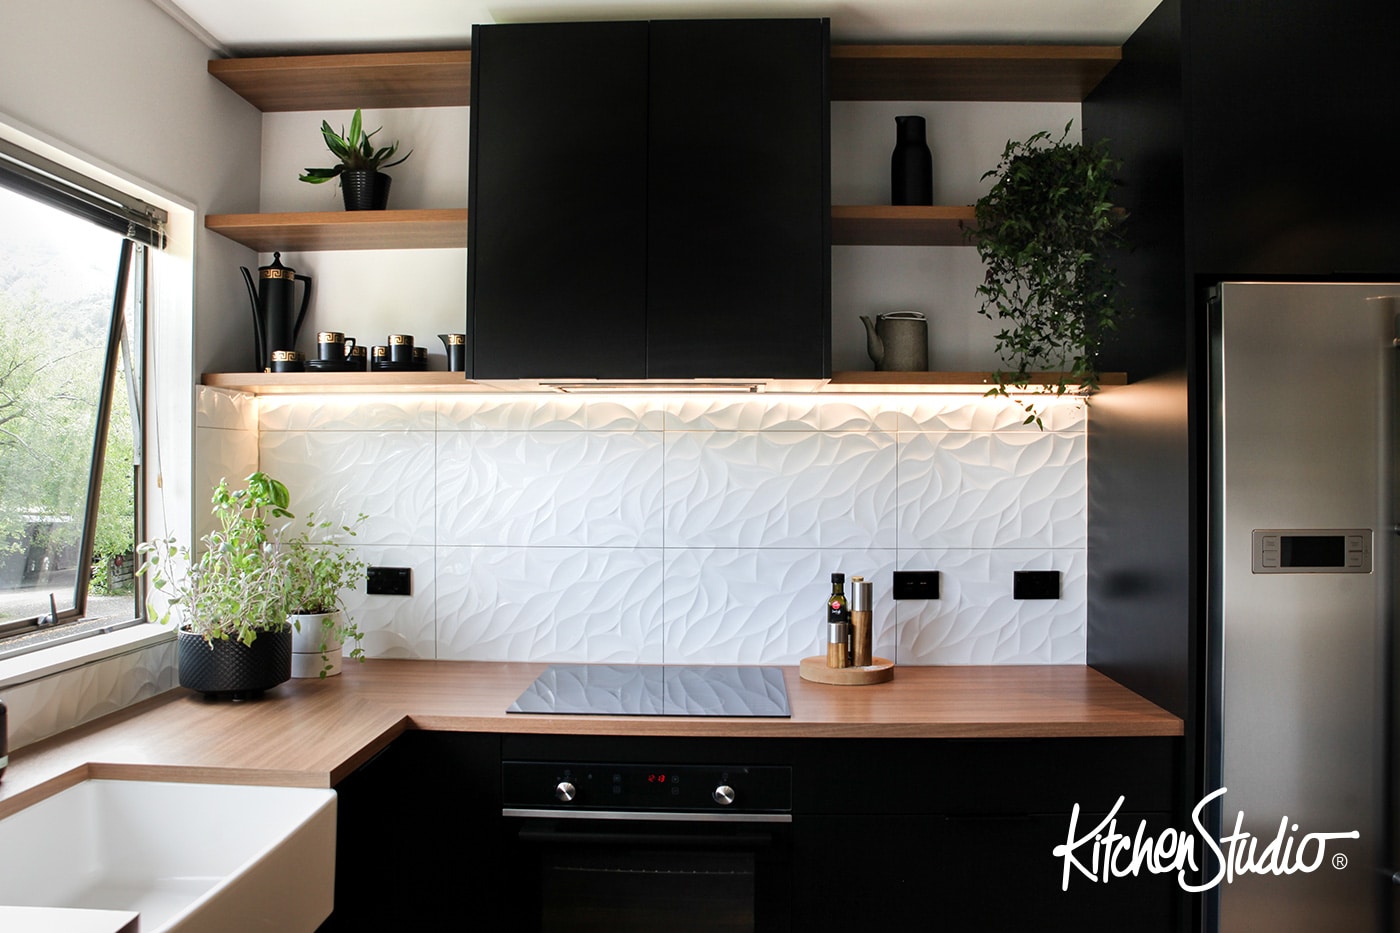 kitchen studio design jerry mango yonkers